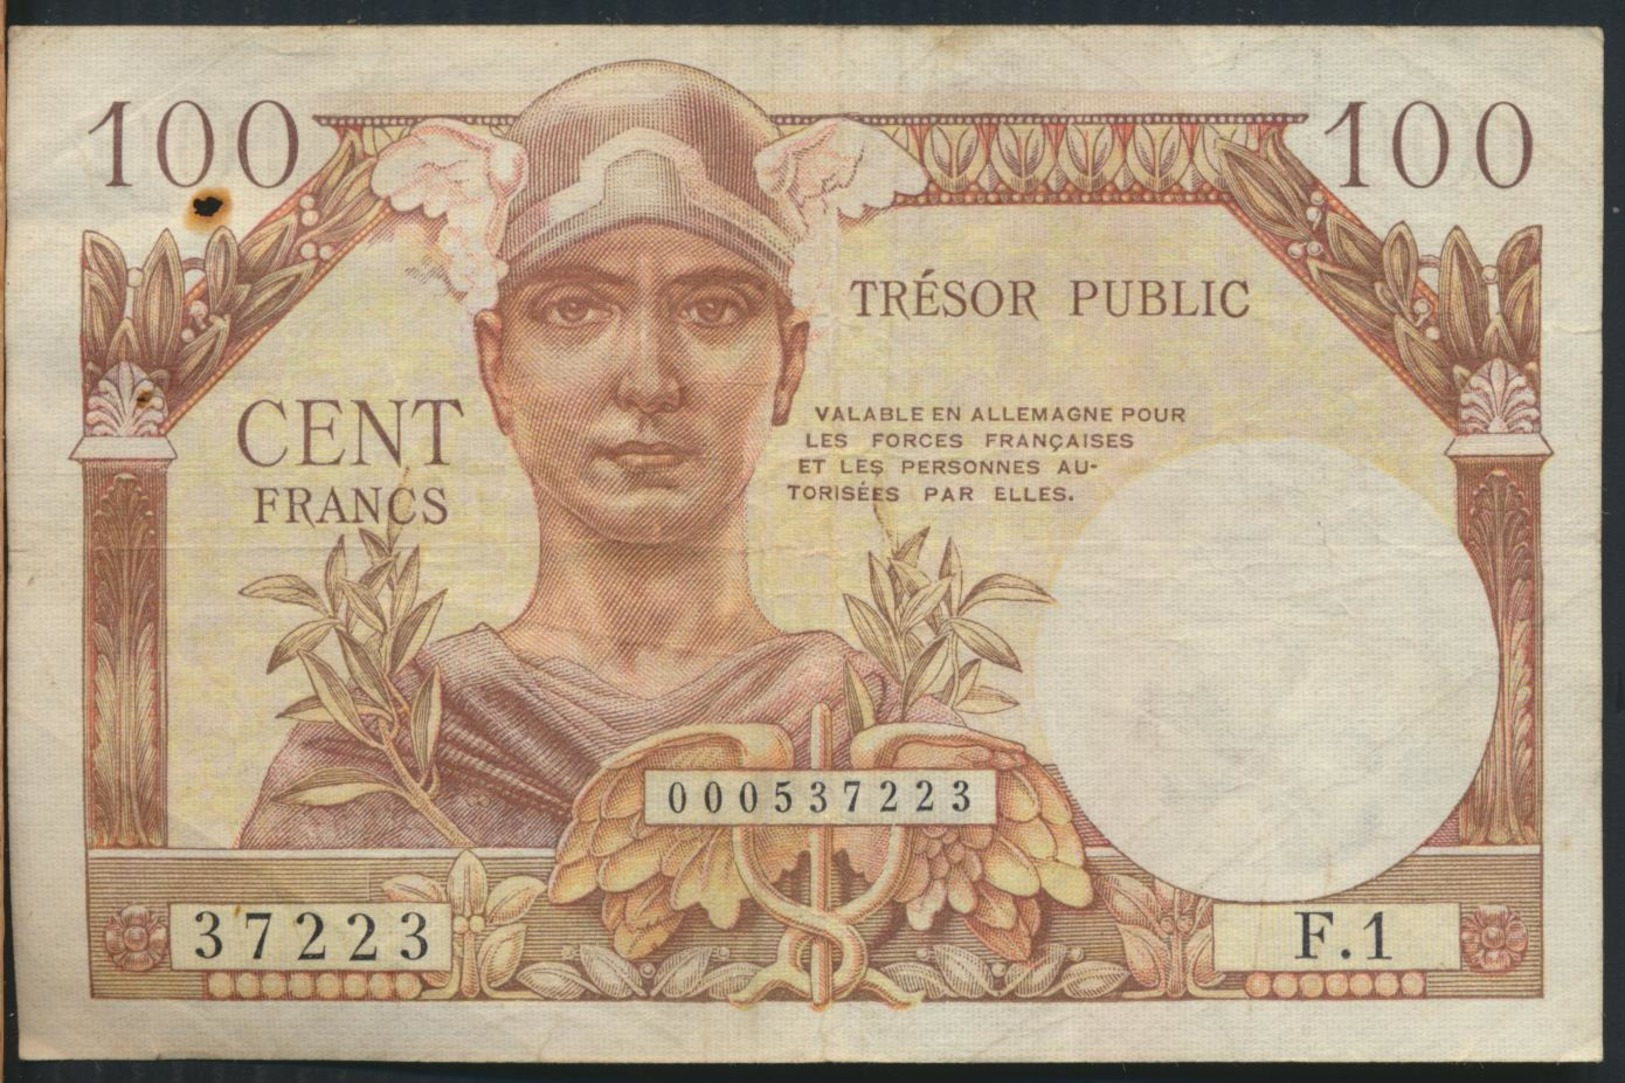 °°° FRANCE - 100 FRANCS TRESOR PUBLIC °°° - 1955-1963 Tesoro Pubblico